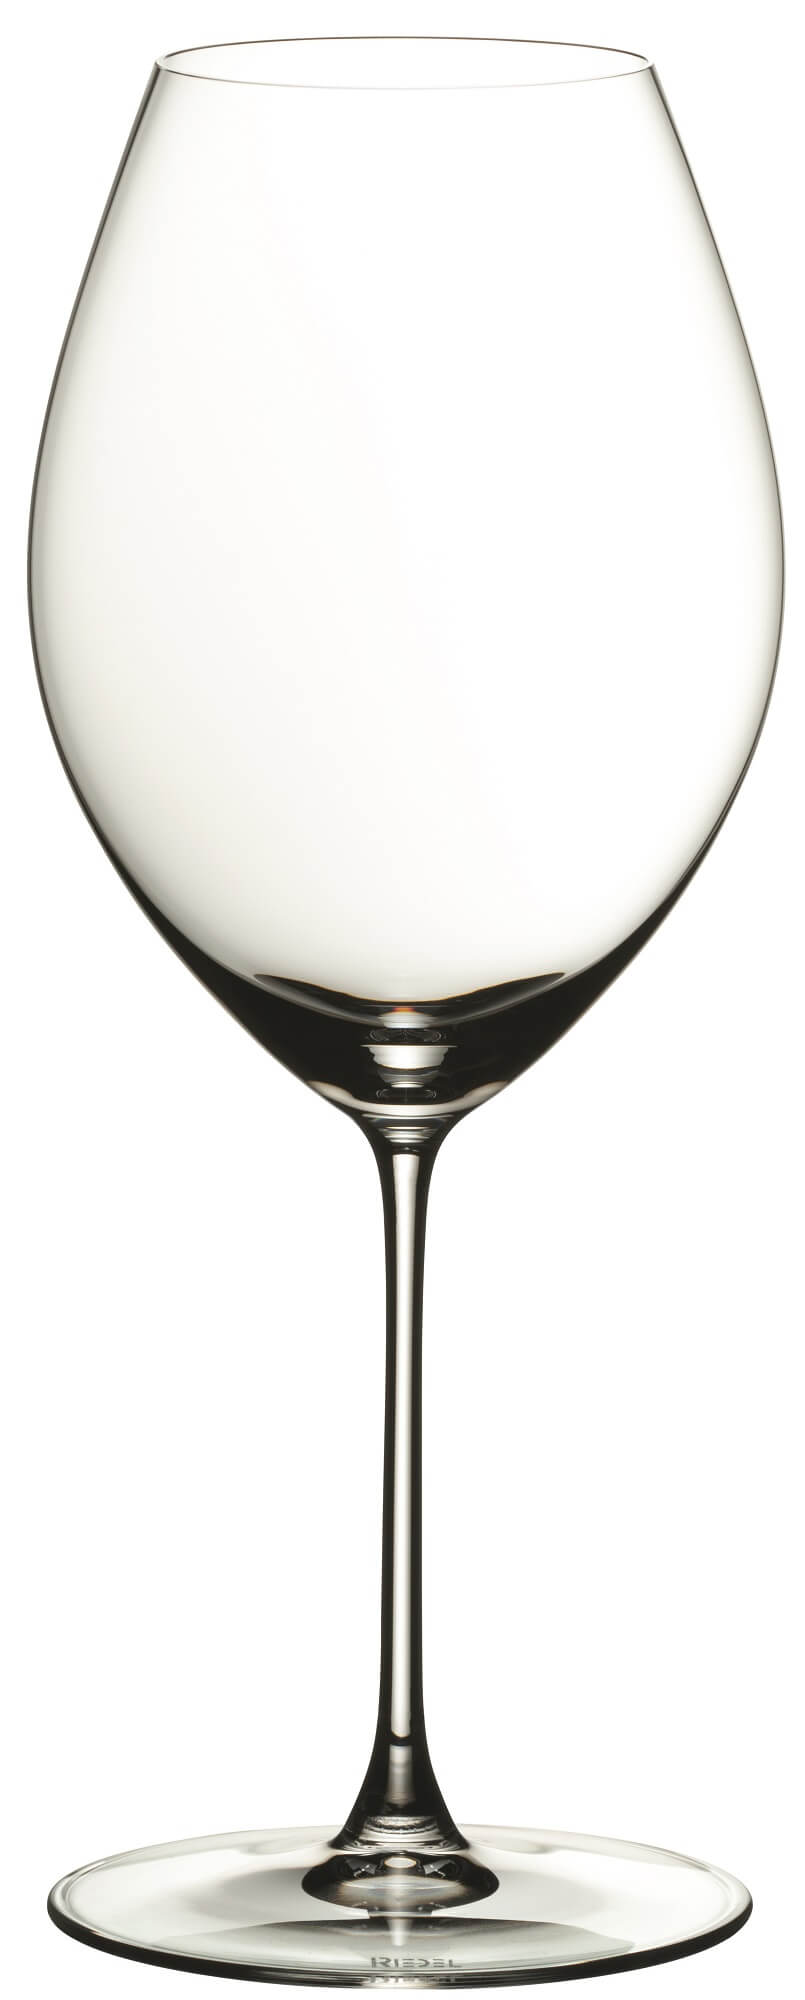 Old World Syrah glass Veritas, Riedel - 600ml (2 pcs.)